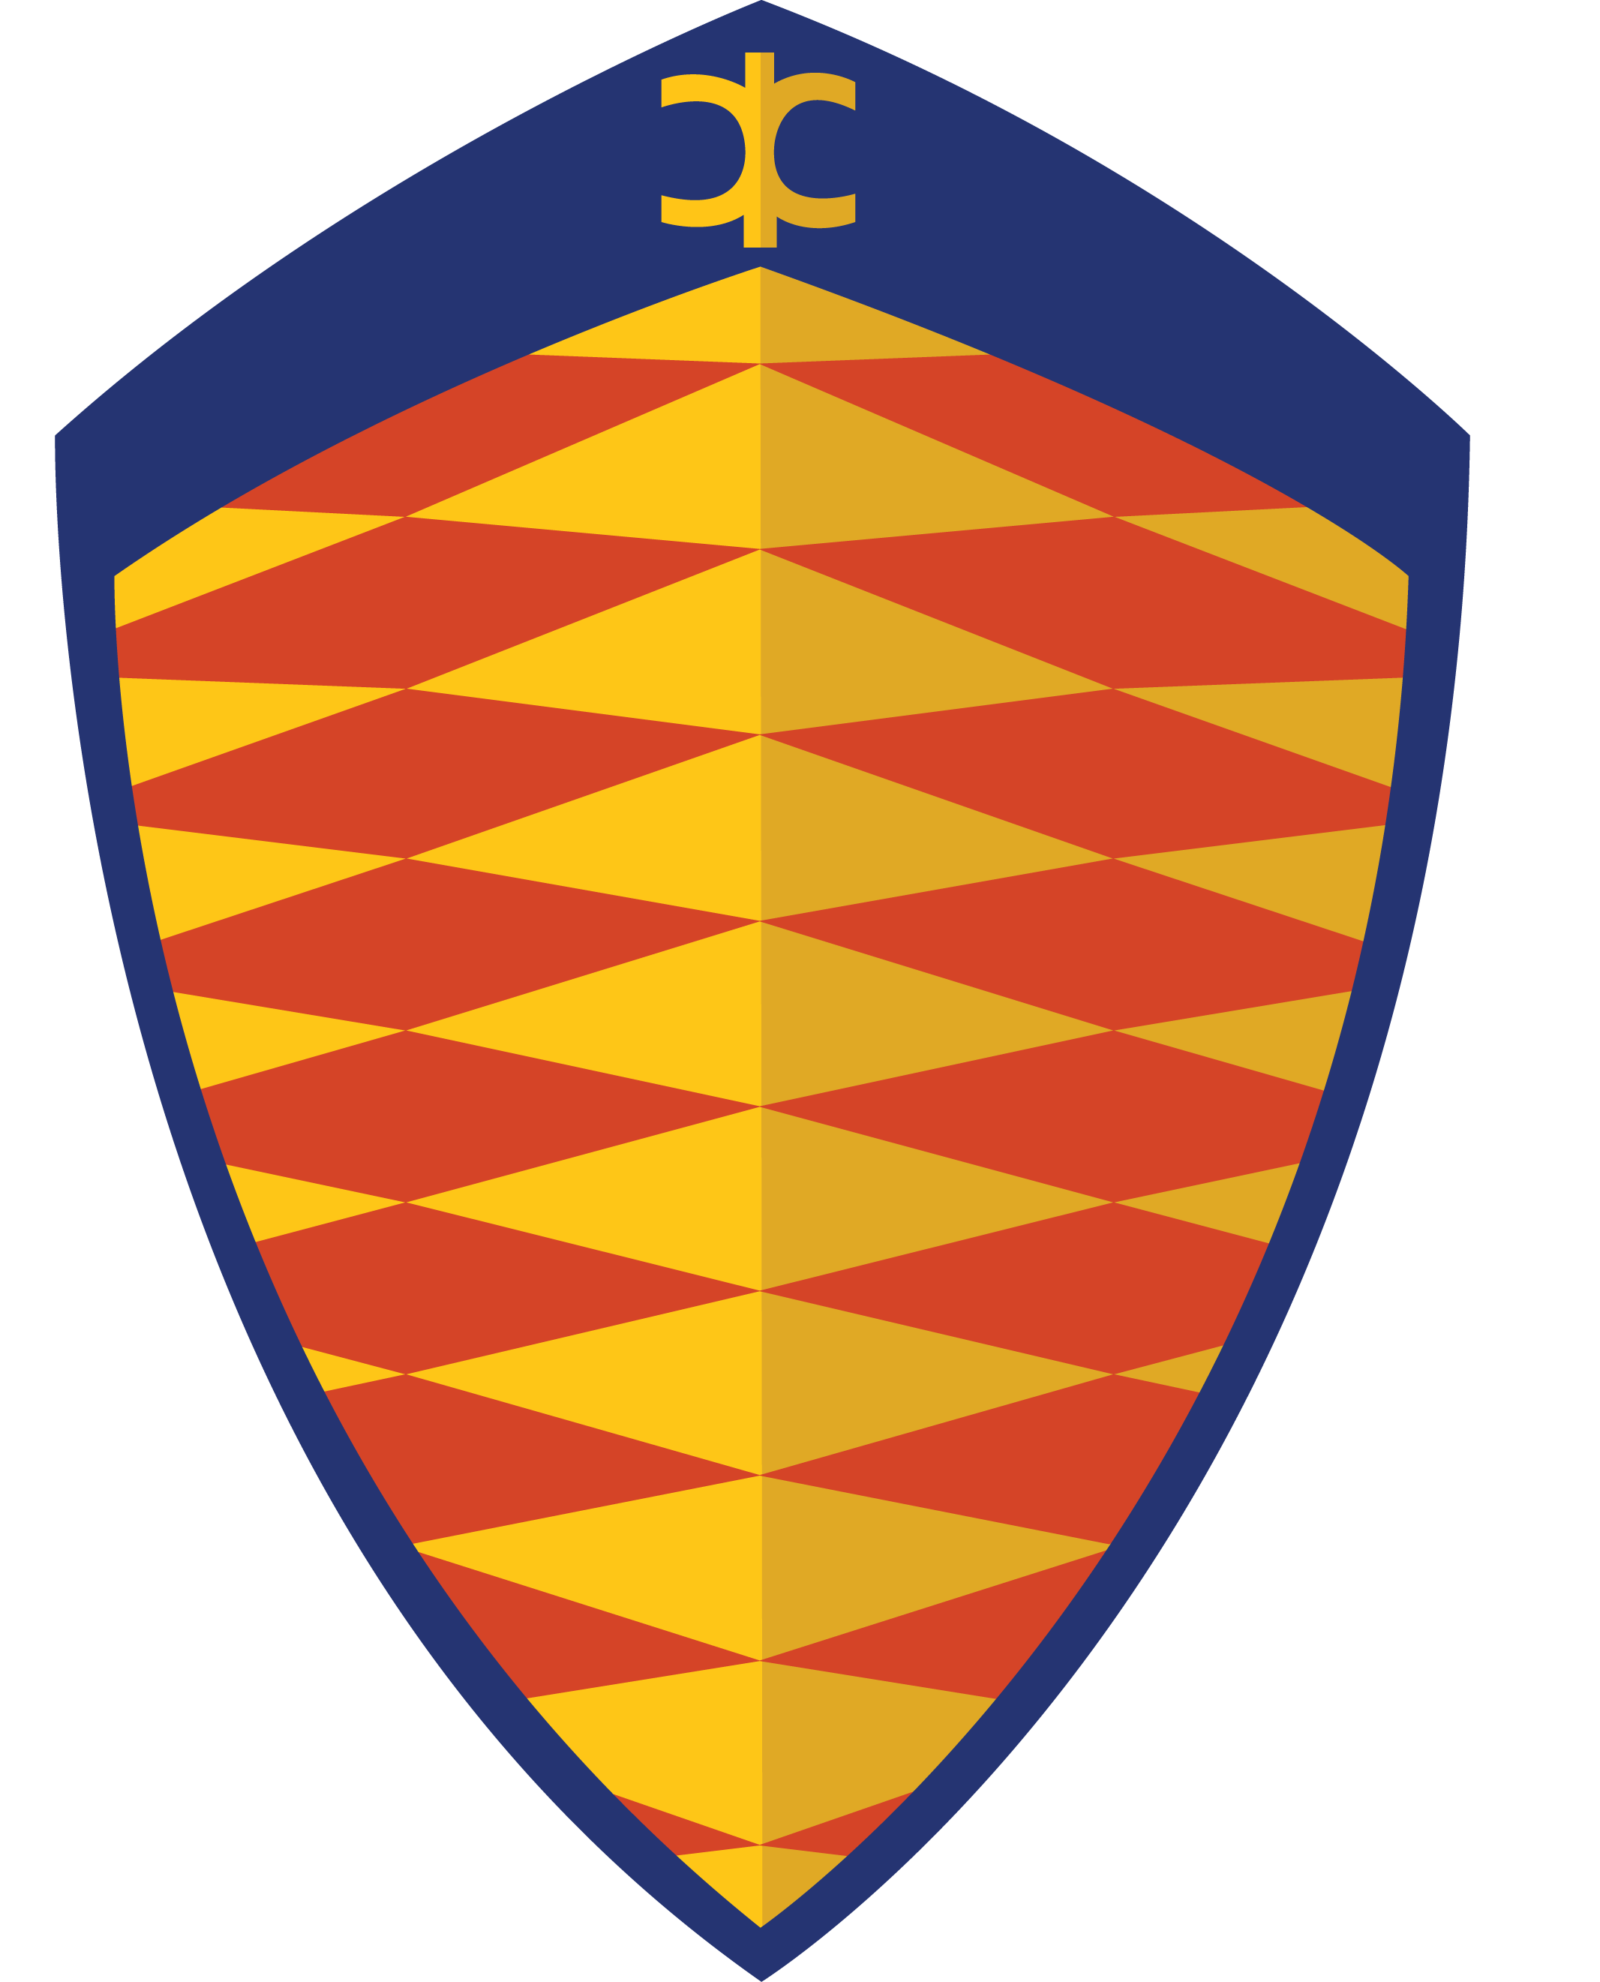 Koenigsegg emblem